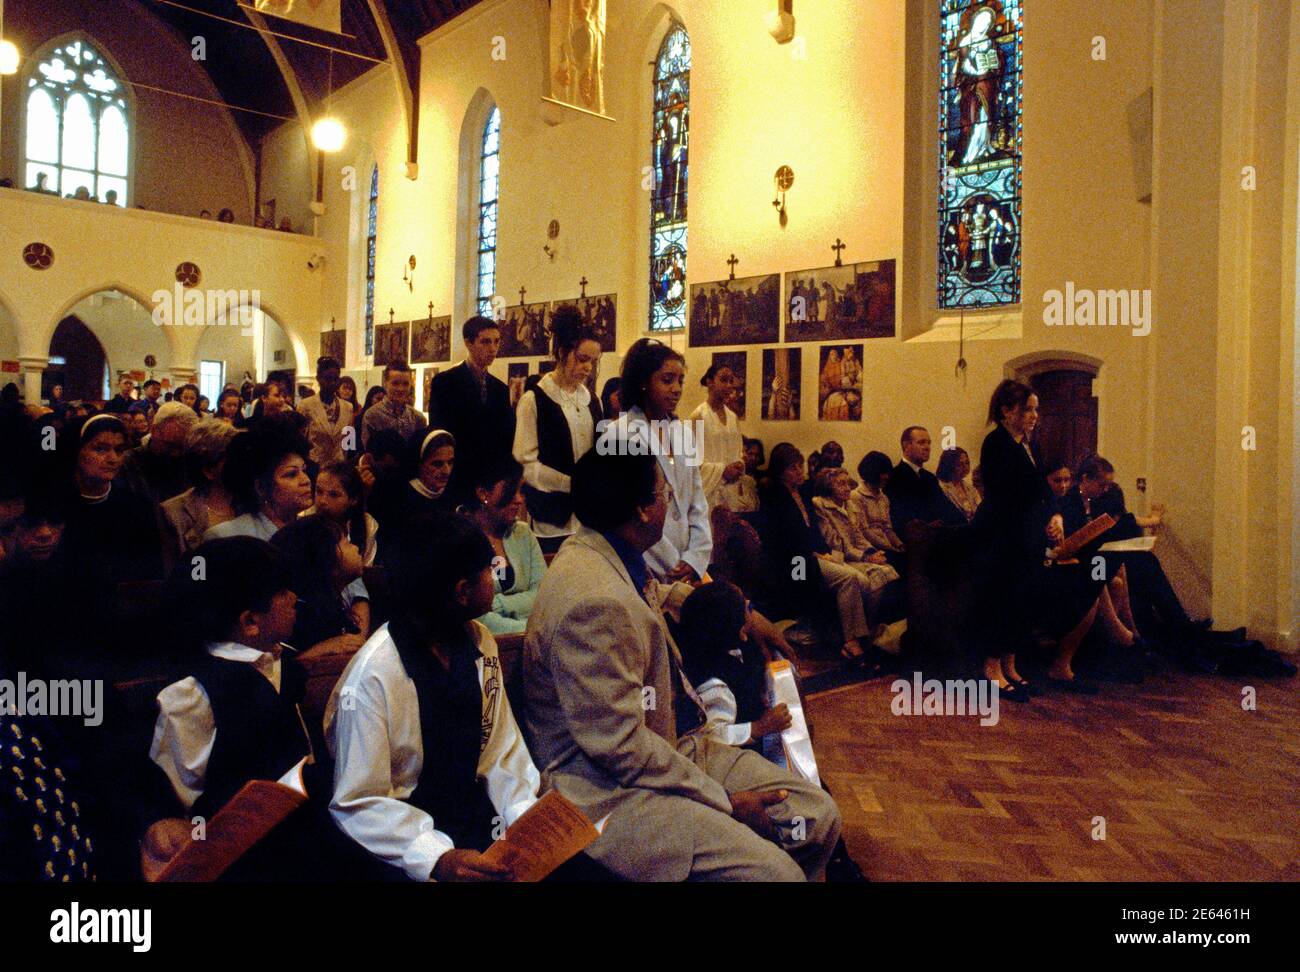 St Joseph's Catholic Church Confirmation At Pentecost Confession During Prayer Stock Photo